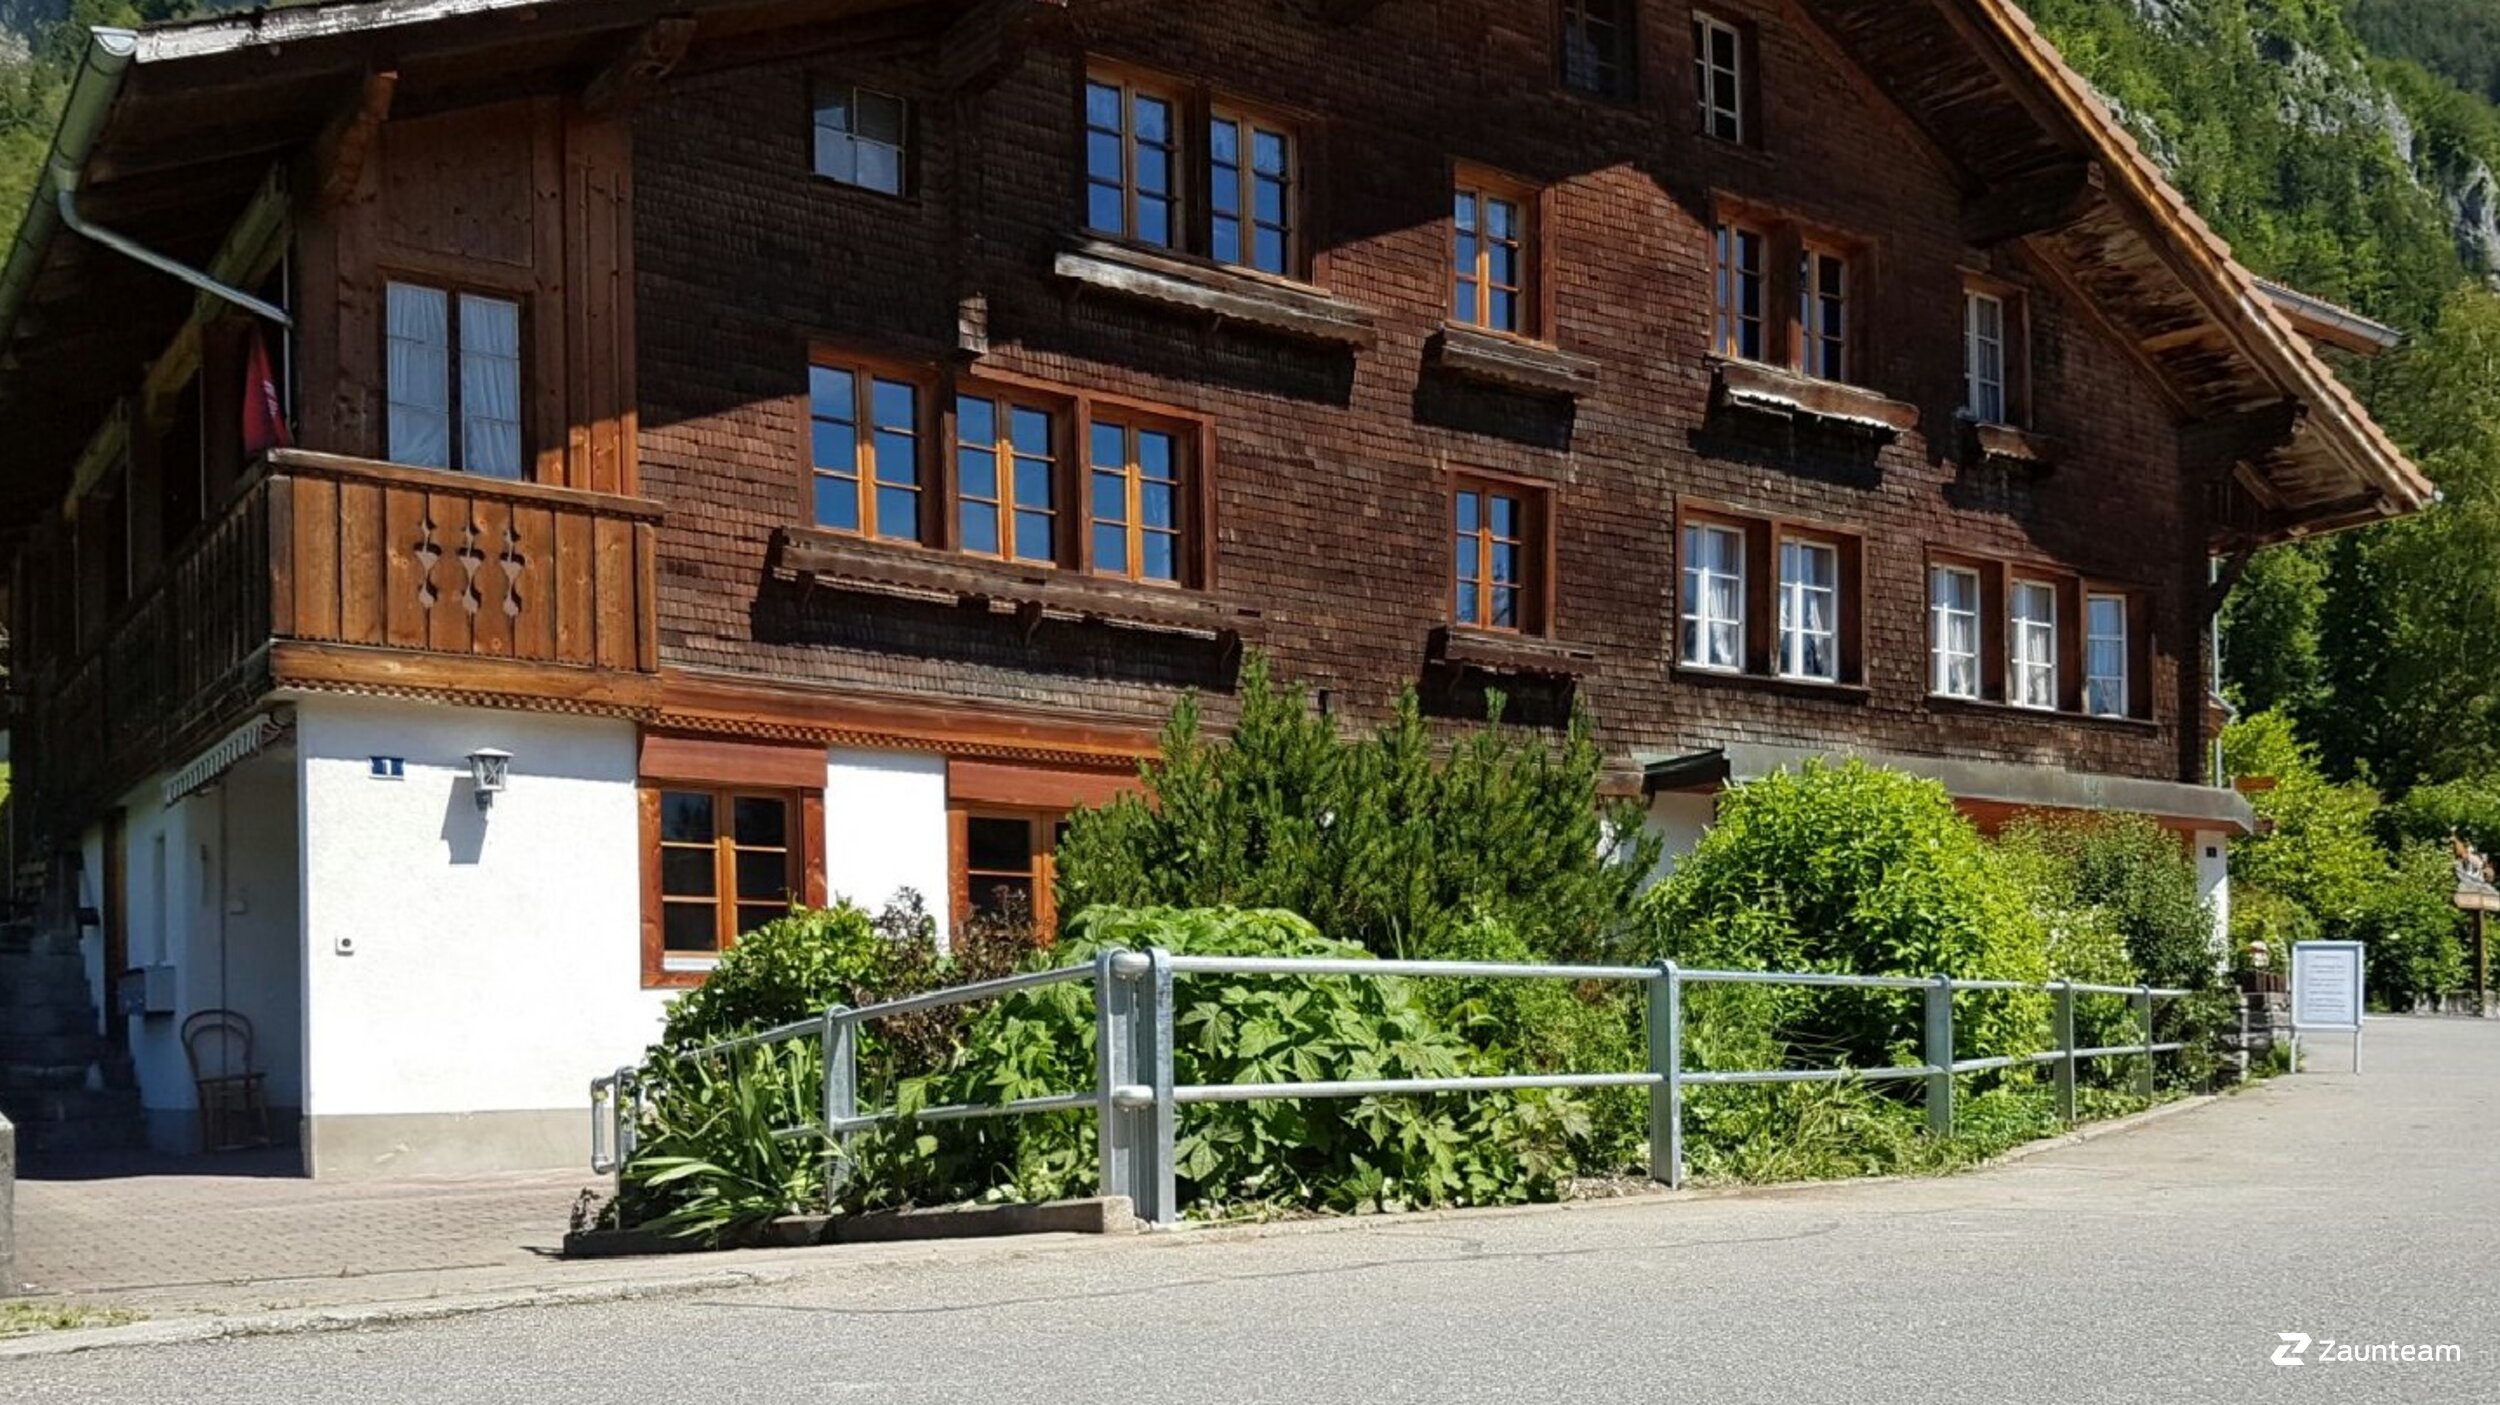 Clôture de chemin de 2016 à 3855 Schwanden, Brienz Suisse de Zaunteam Berner Oberland.